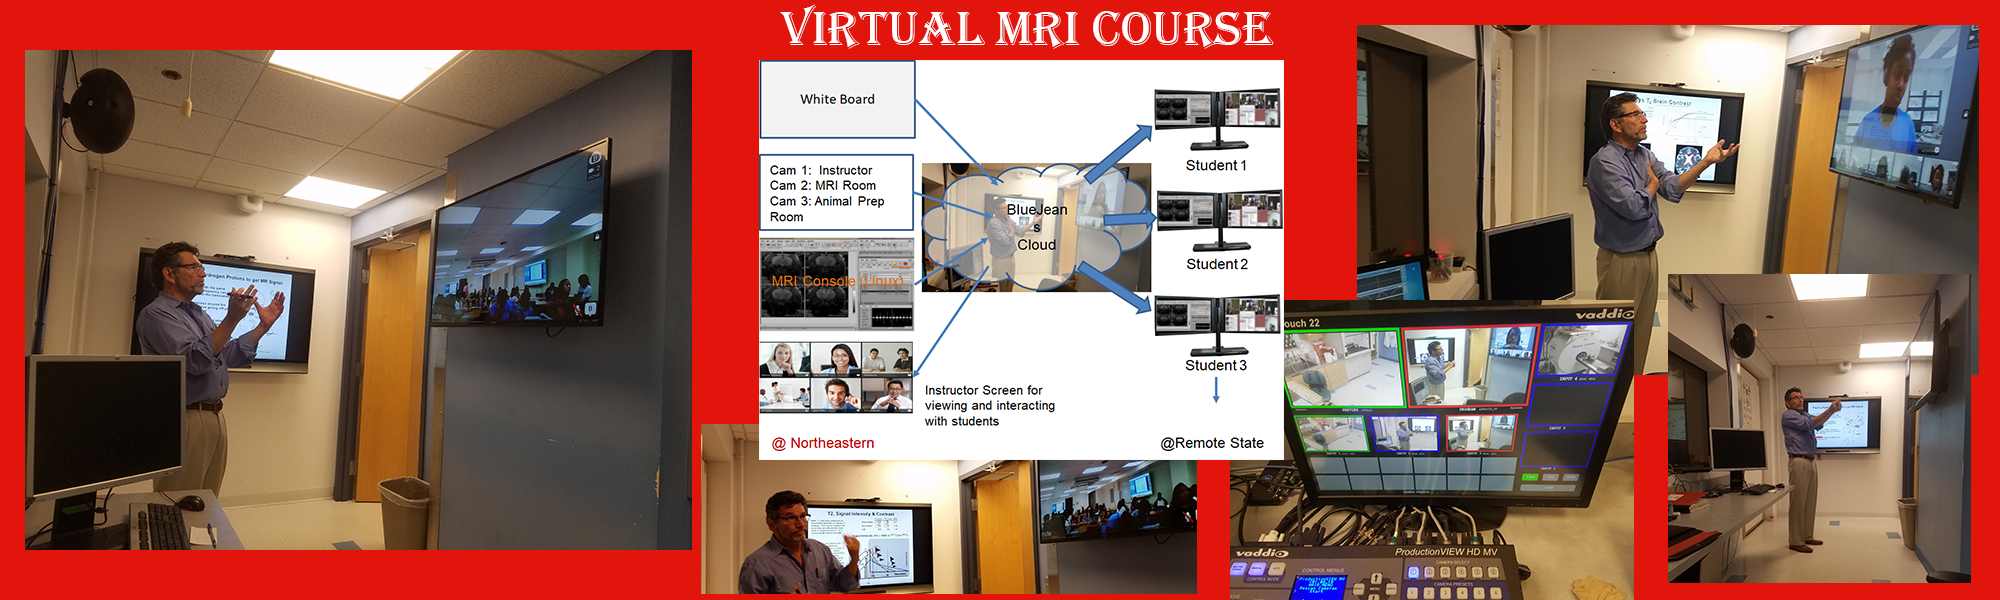 Virtual_MRI_Course